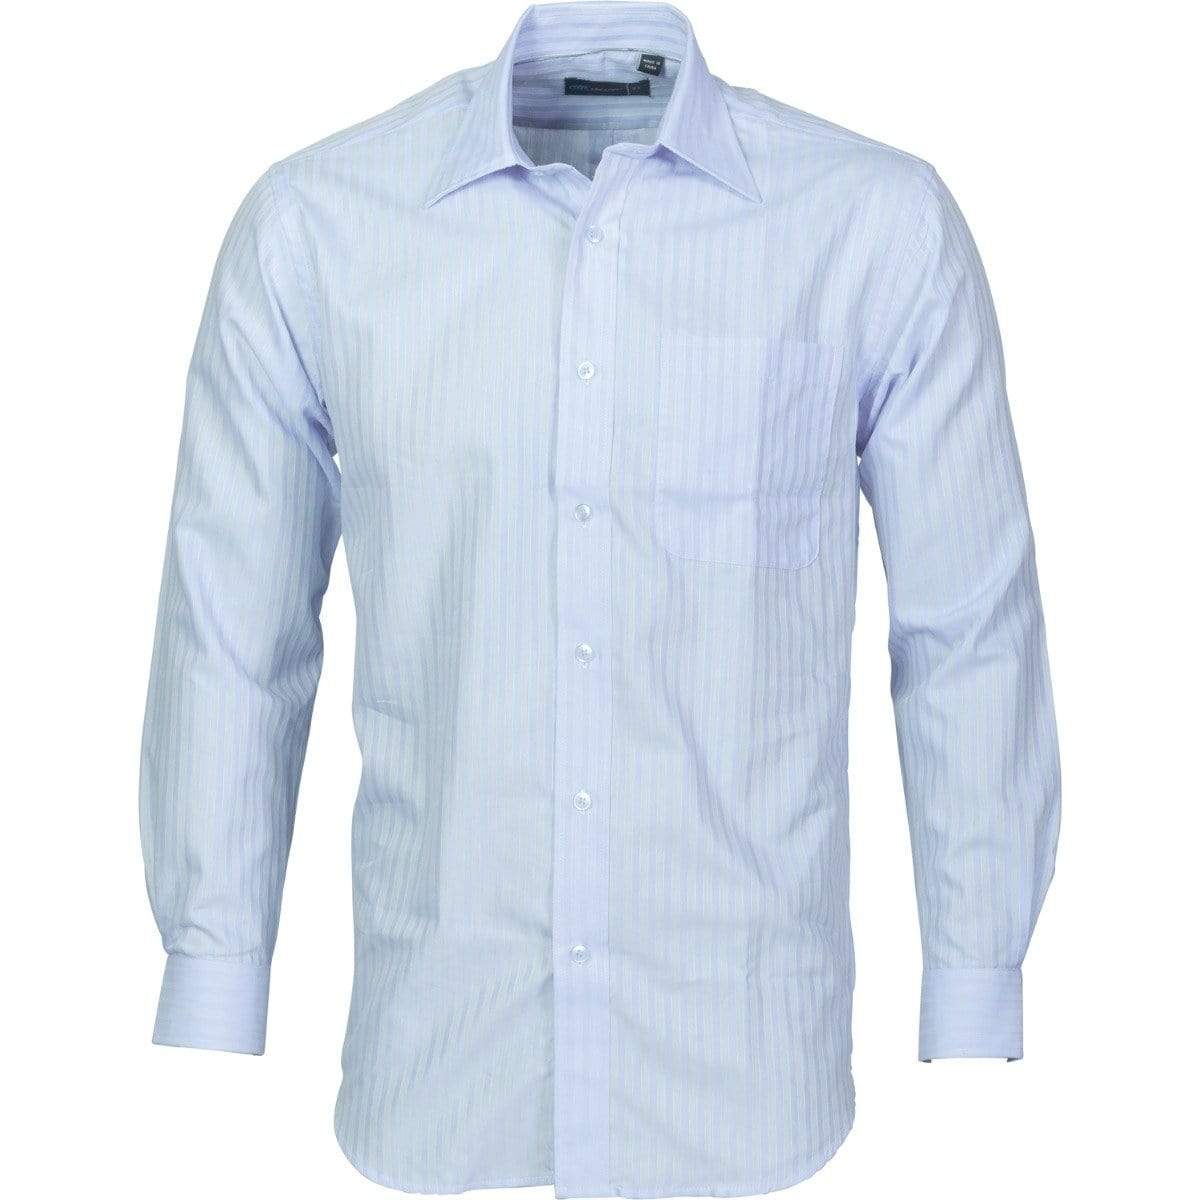 Dnc Workwear Men’s Tonal Stripe Long Sleeve Shirt - 4156 Corporate Wear DNC Workwear Light Blue 37 